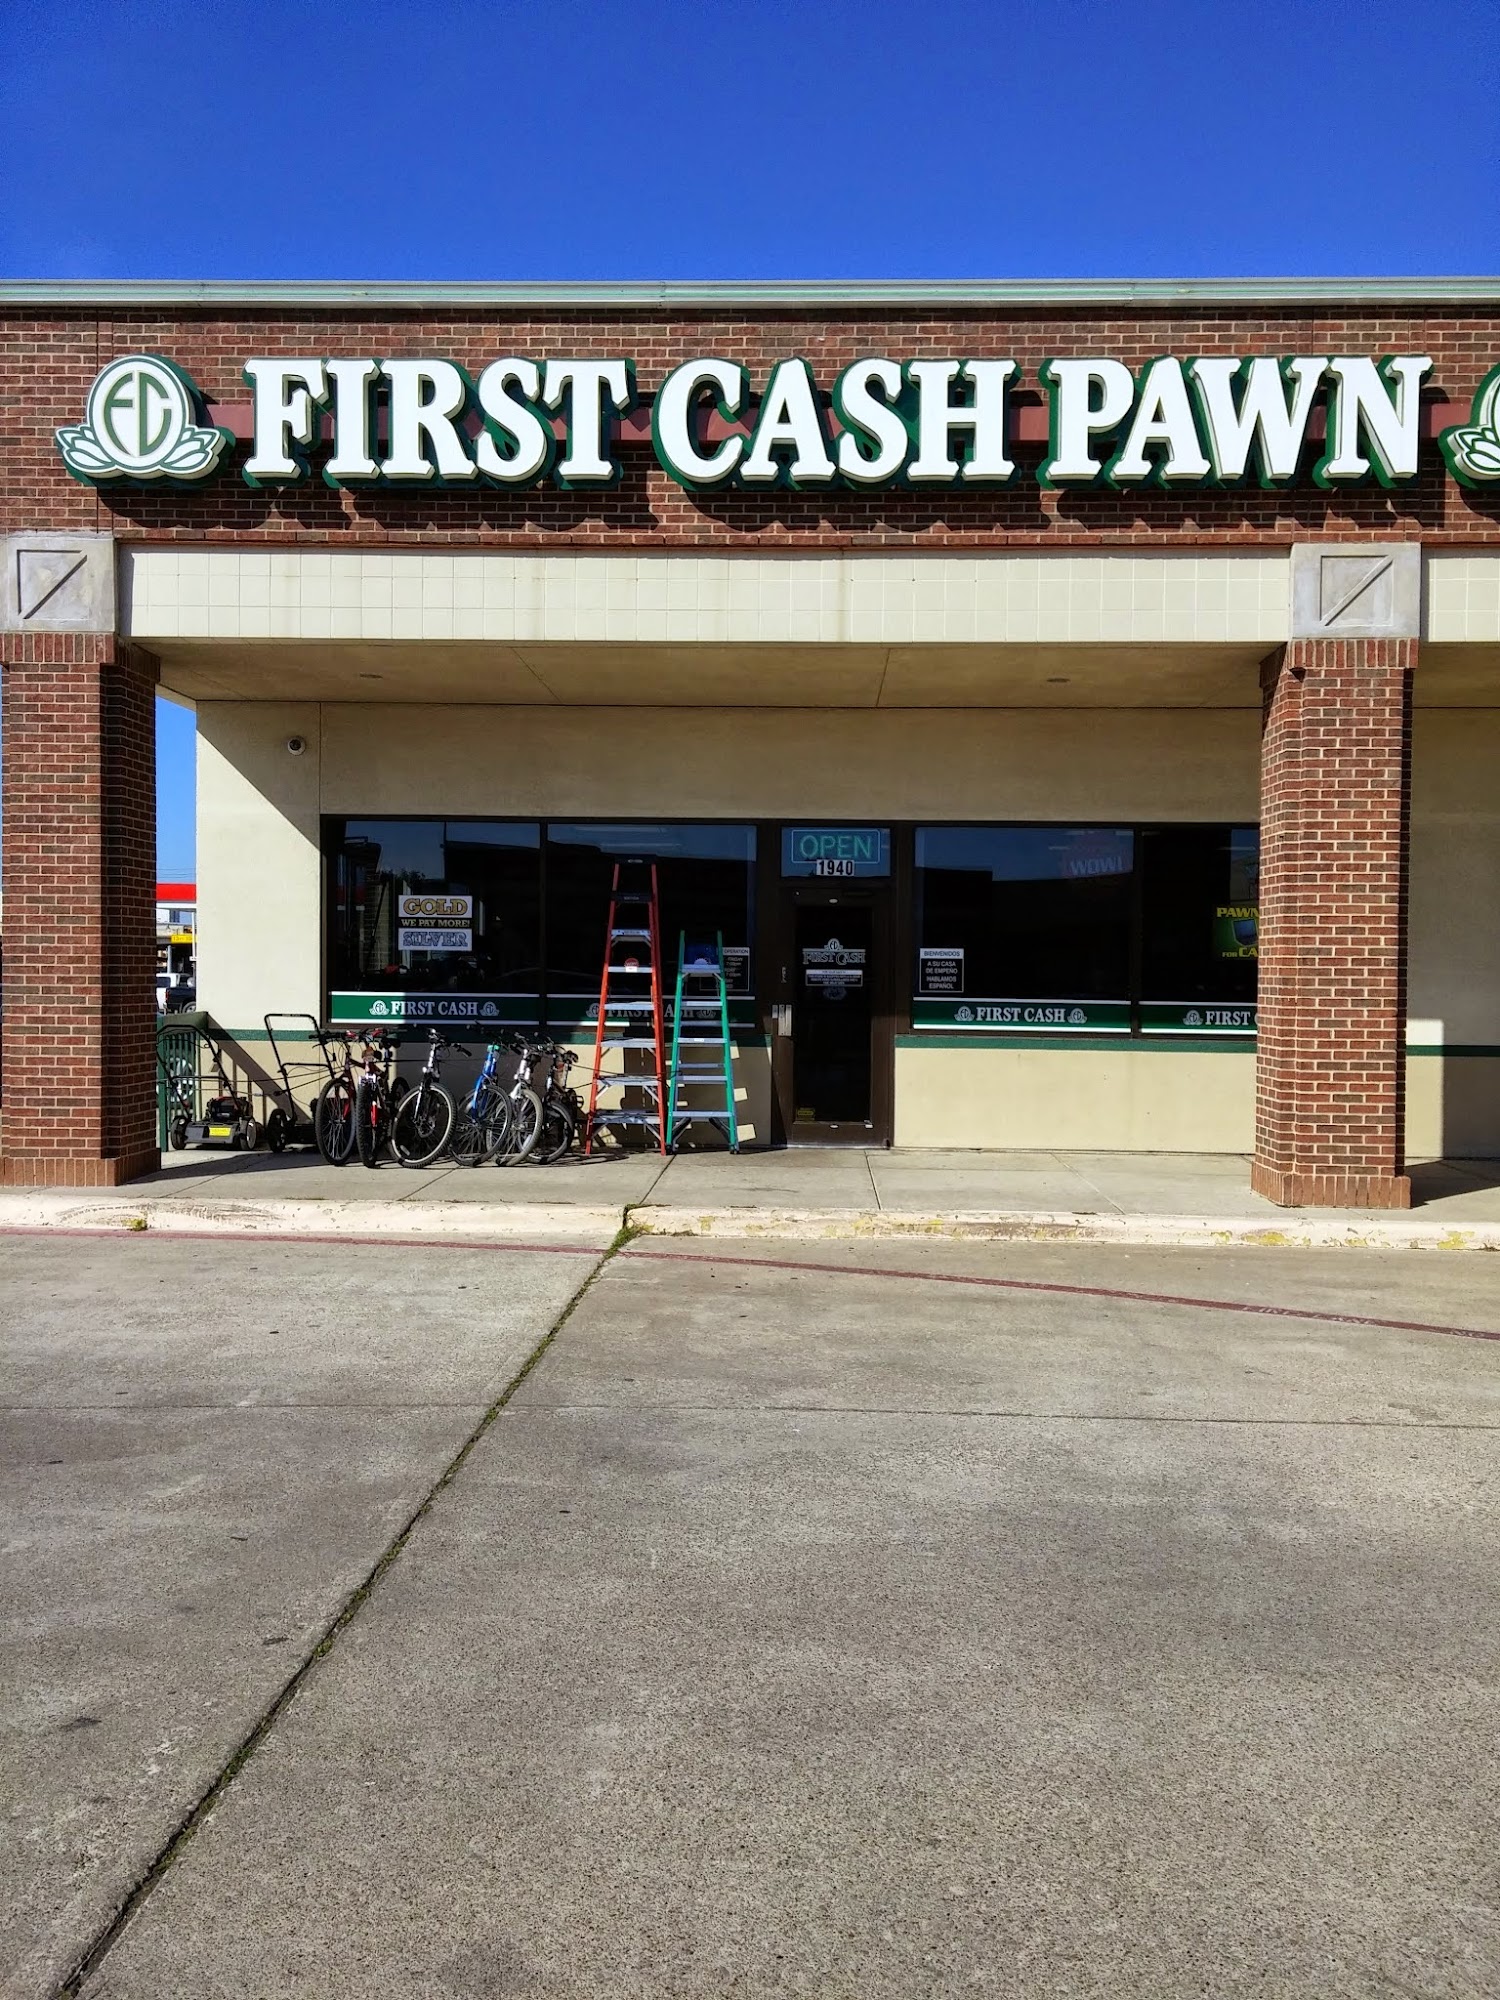 First cash pawn